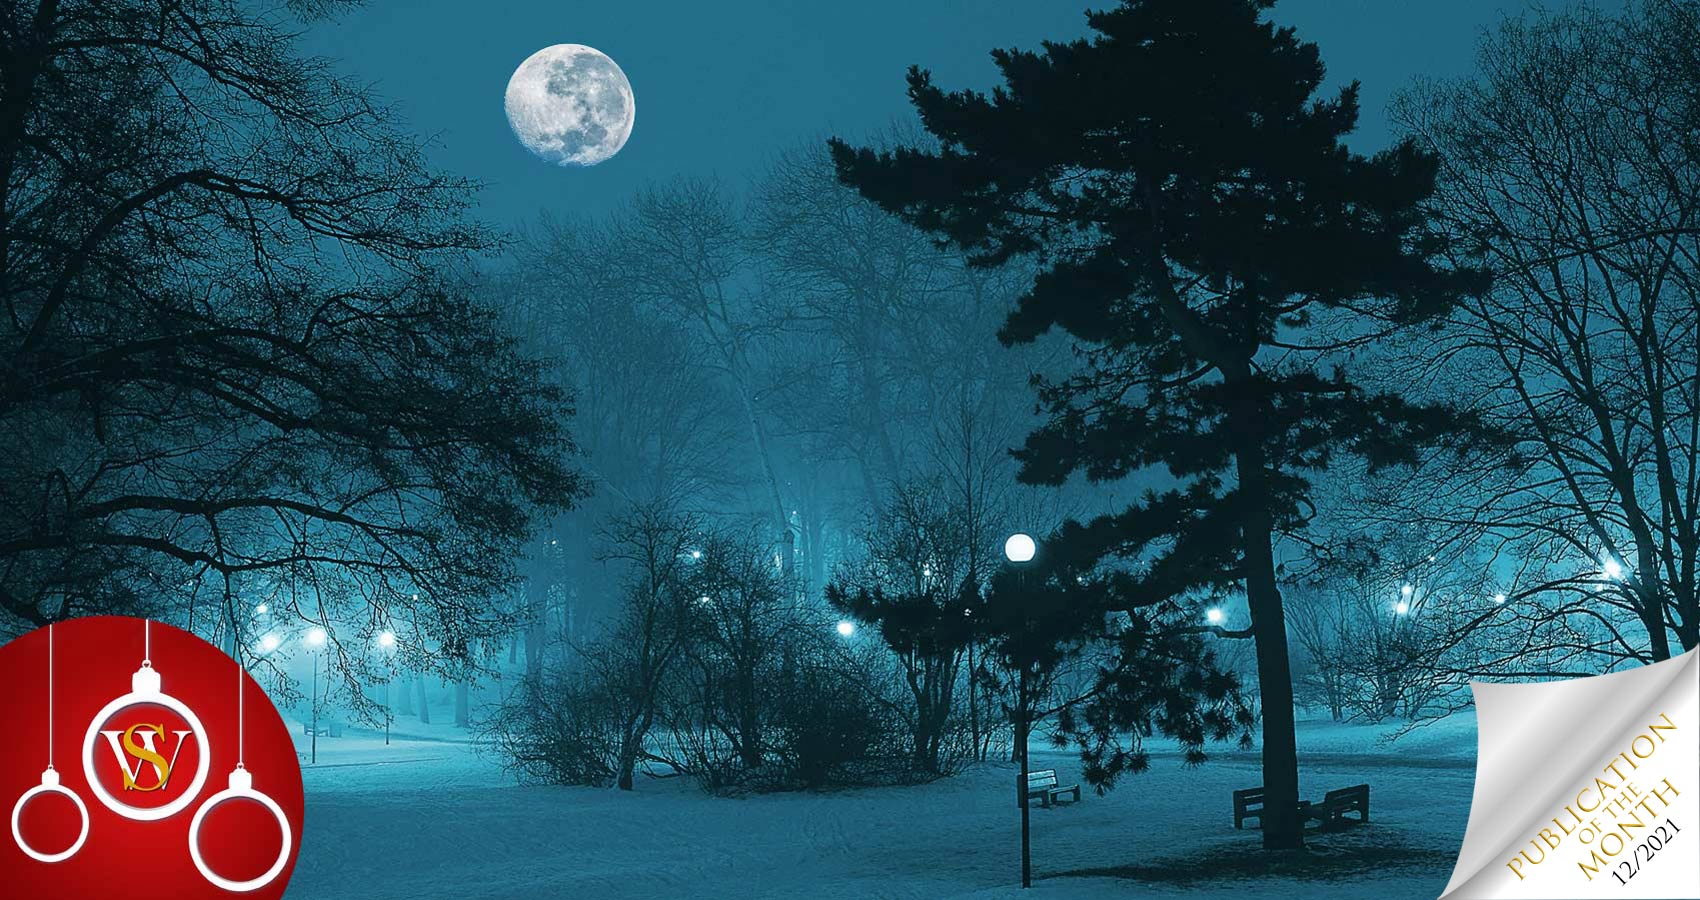 The Christmas Moon, a poem by Rain Alchemist at Spilwords.com